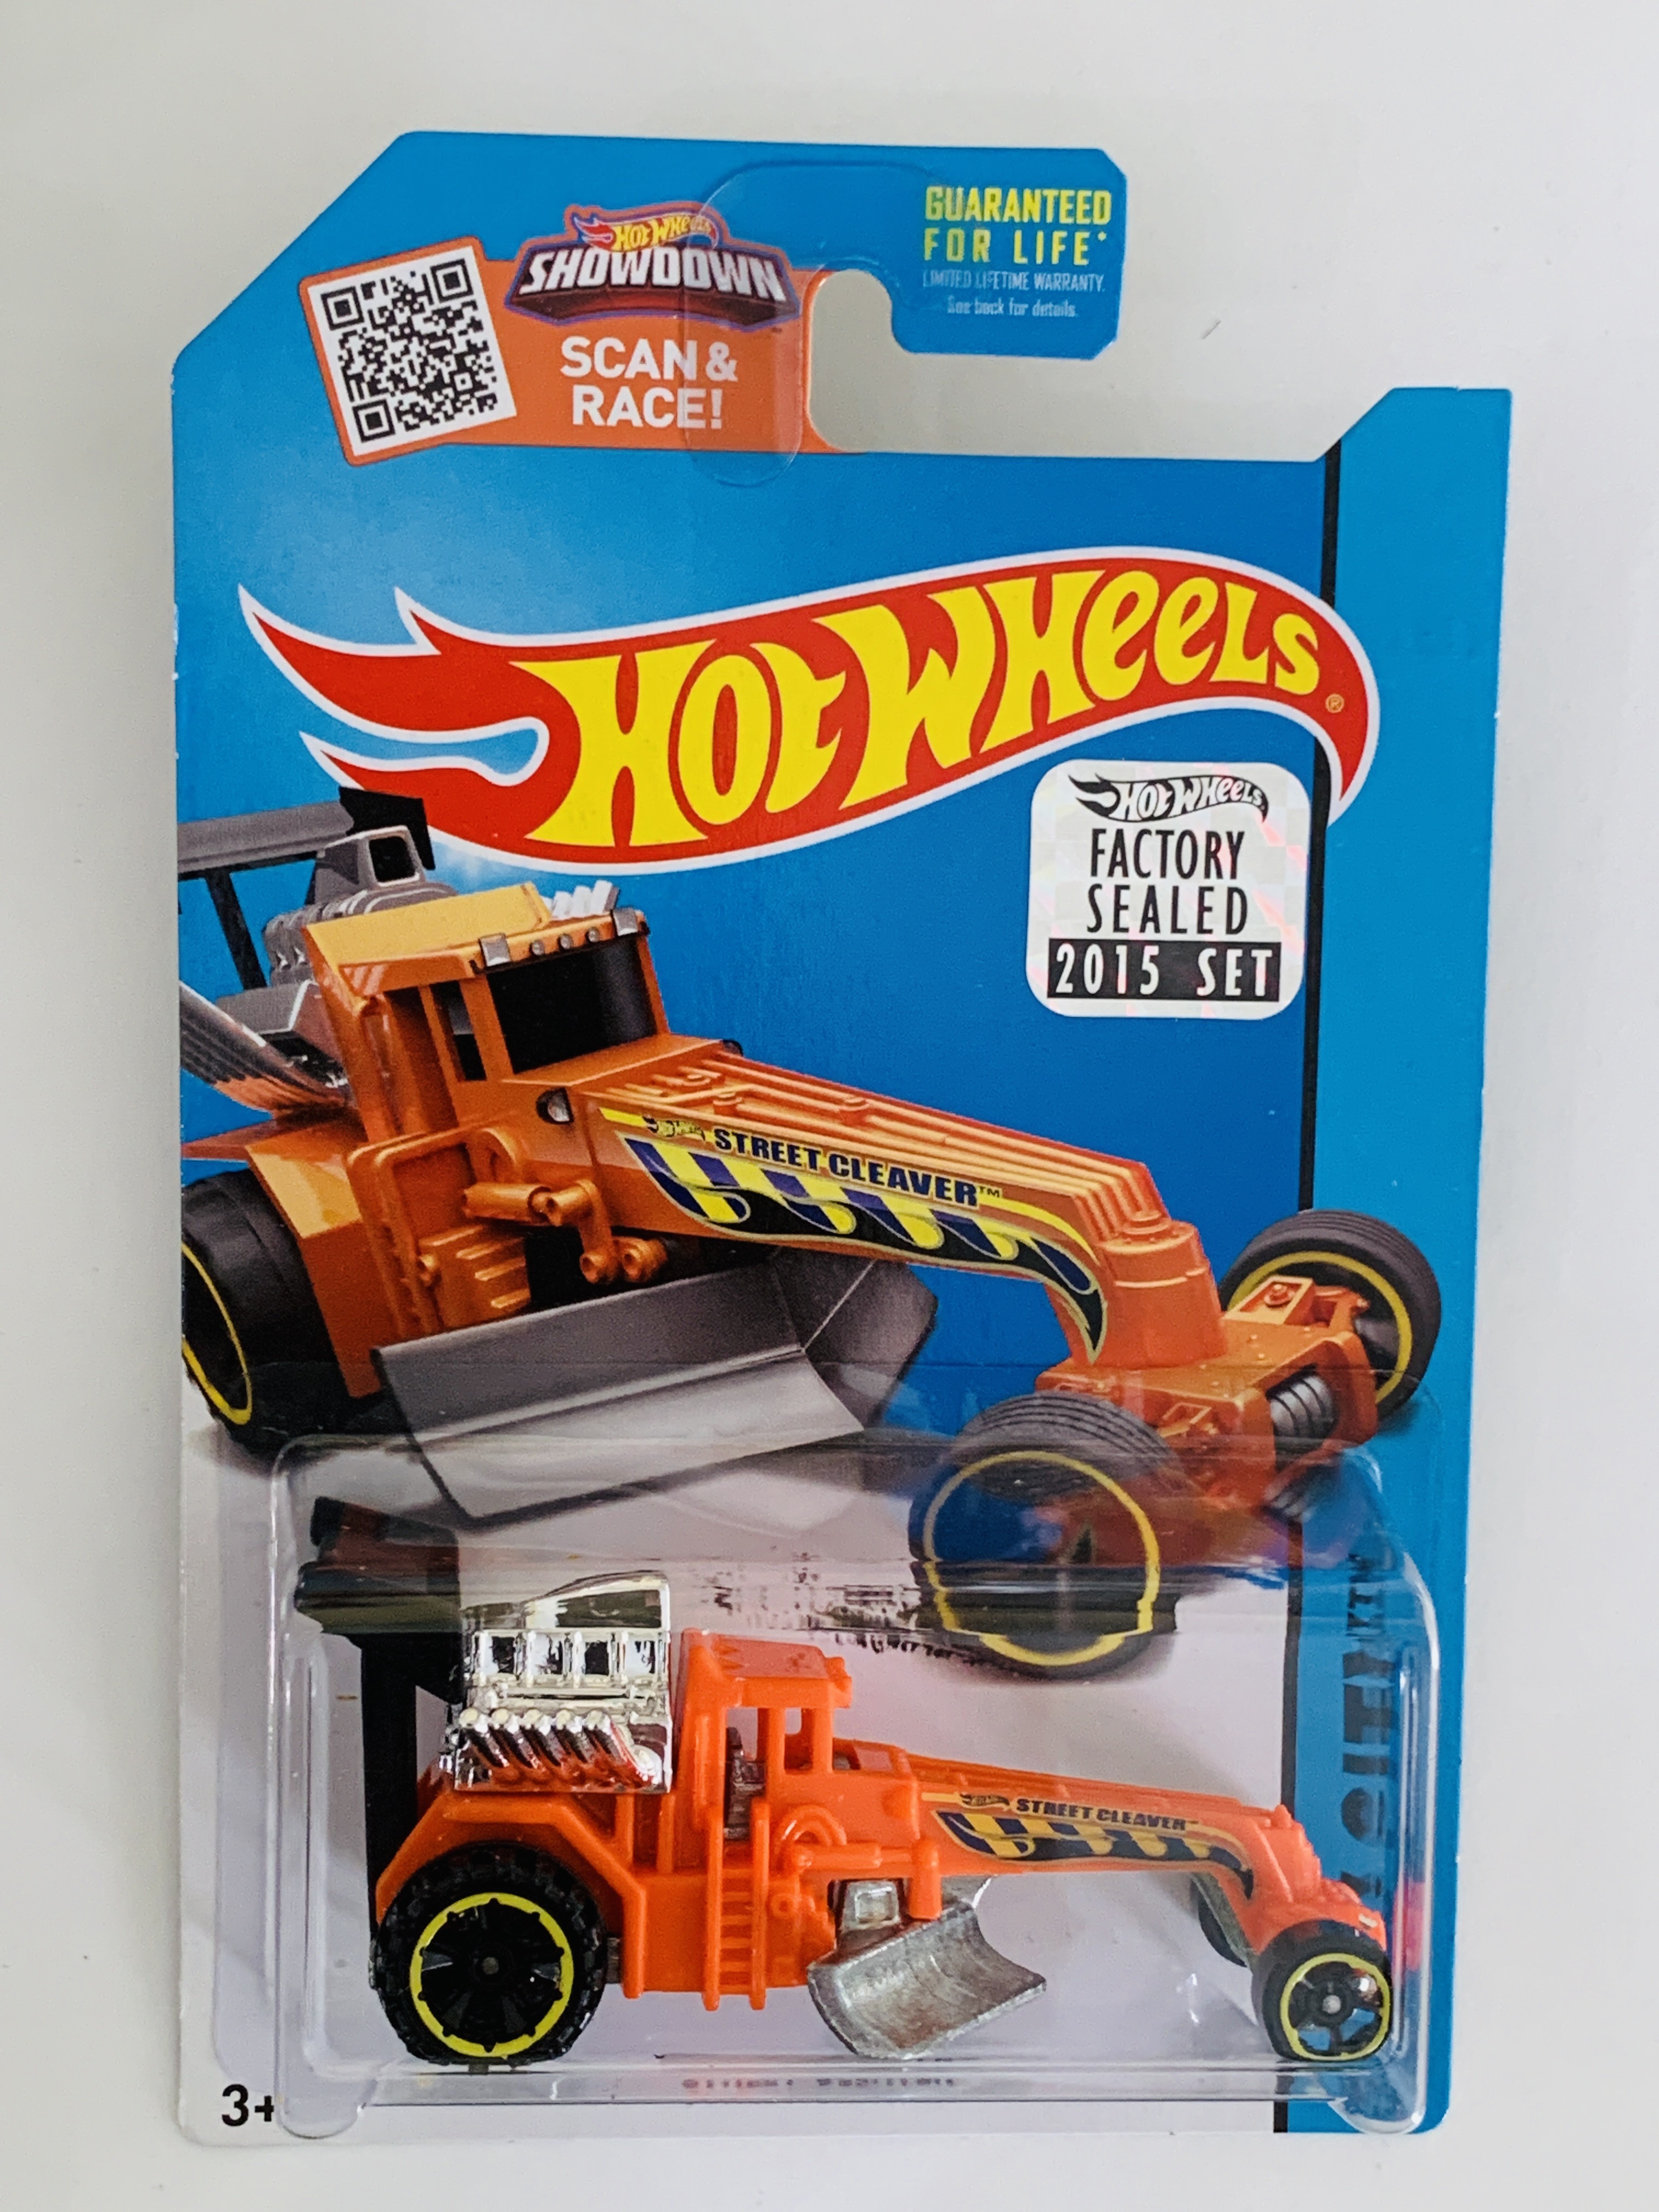 Hot Wheels 2015 Factory Set #10 Street Cleaver - Orange